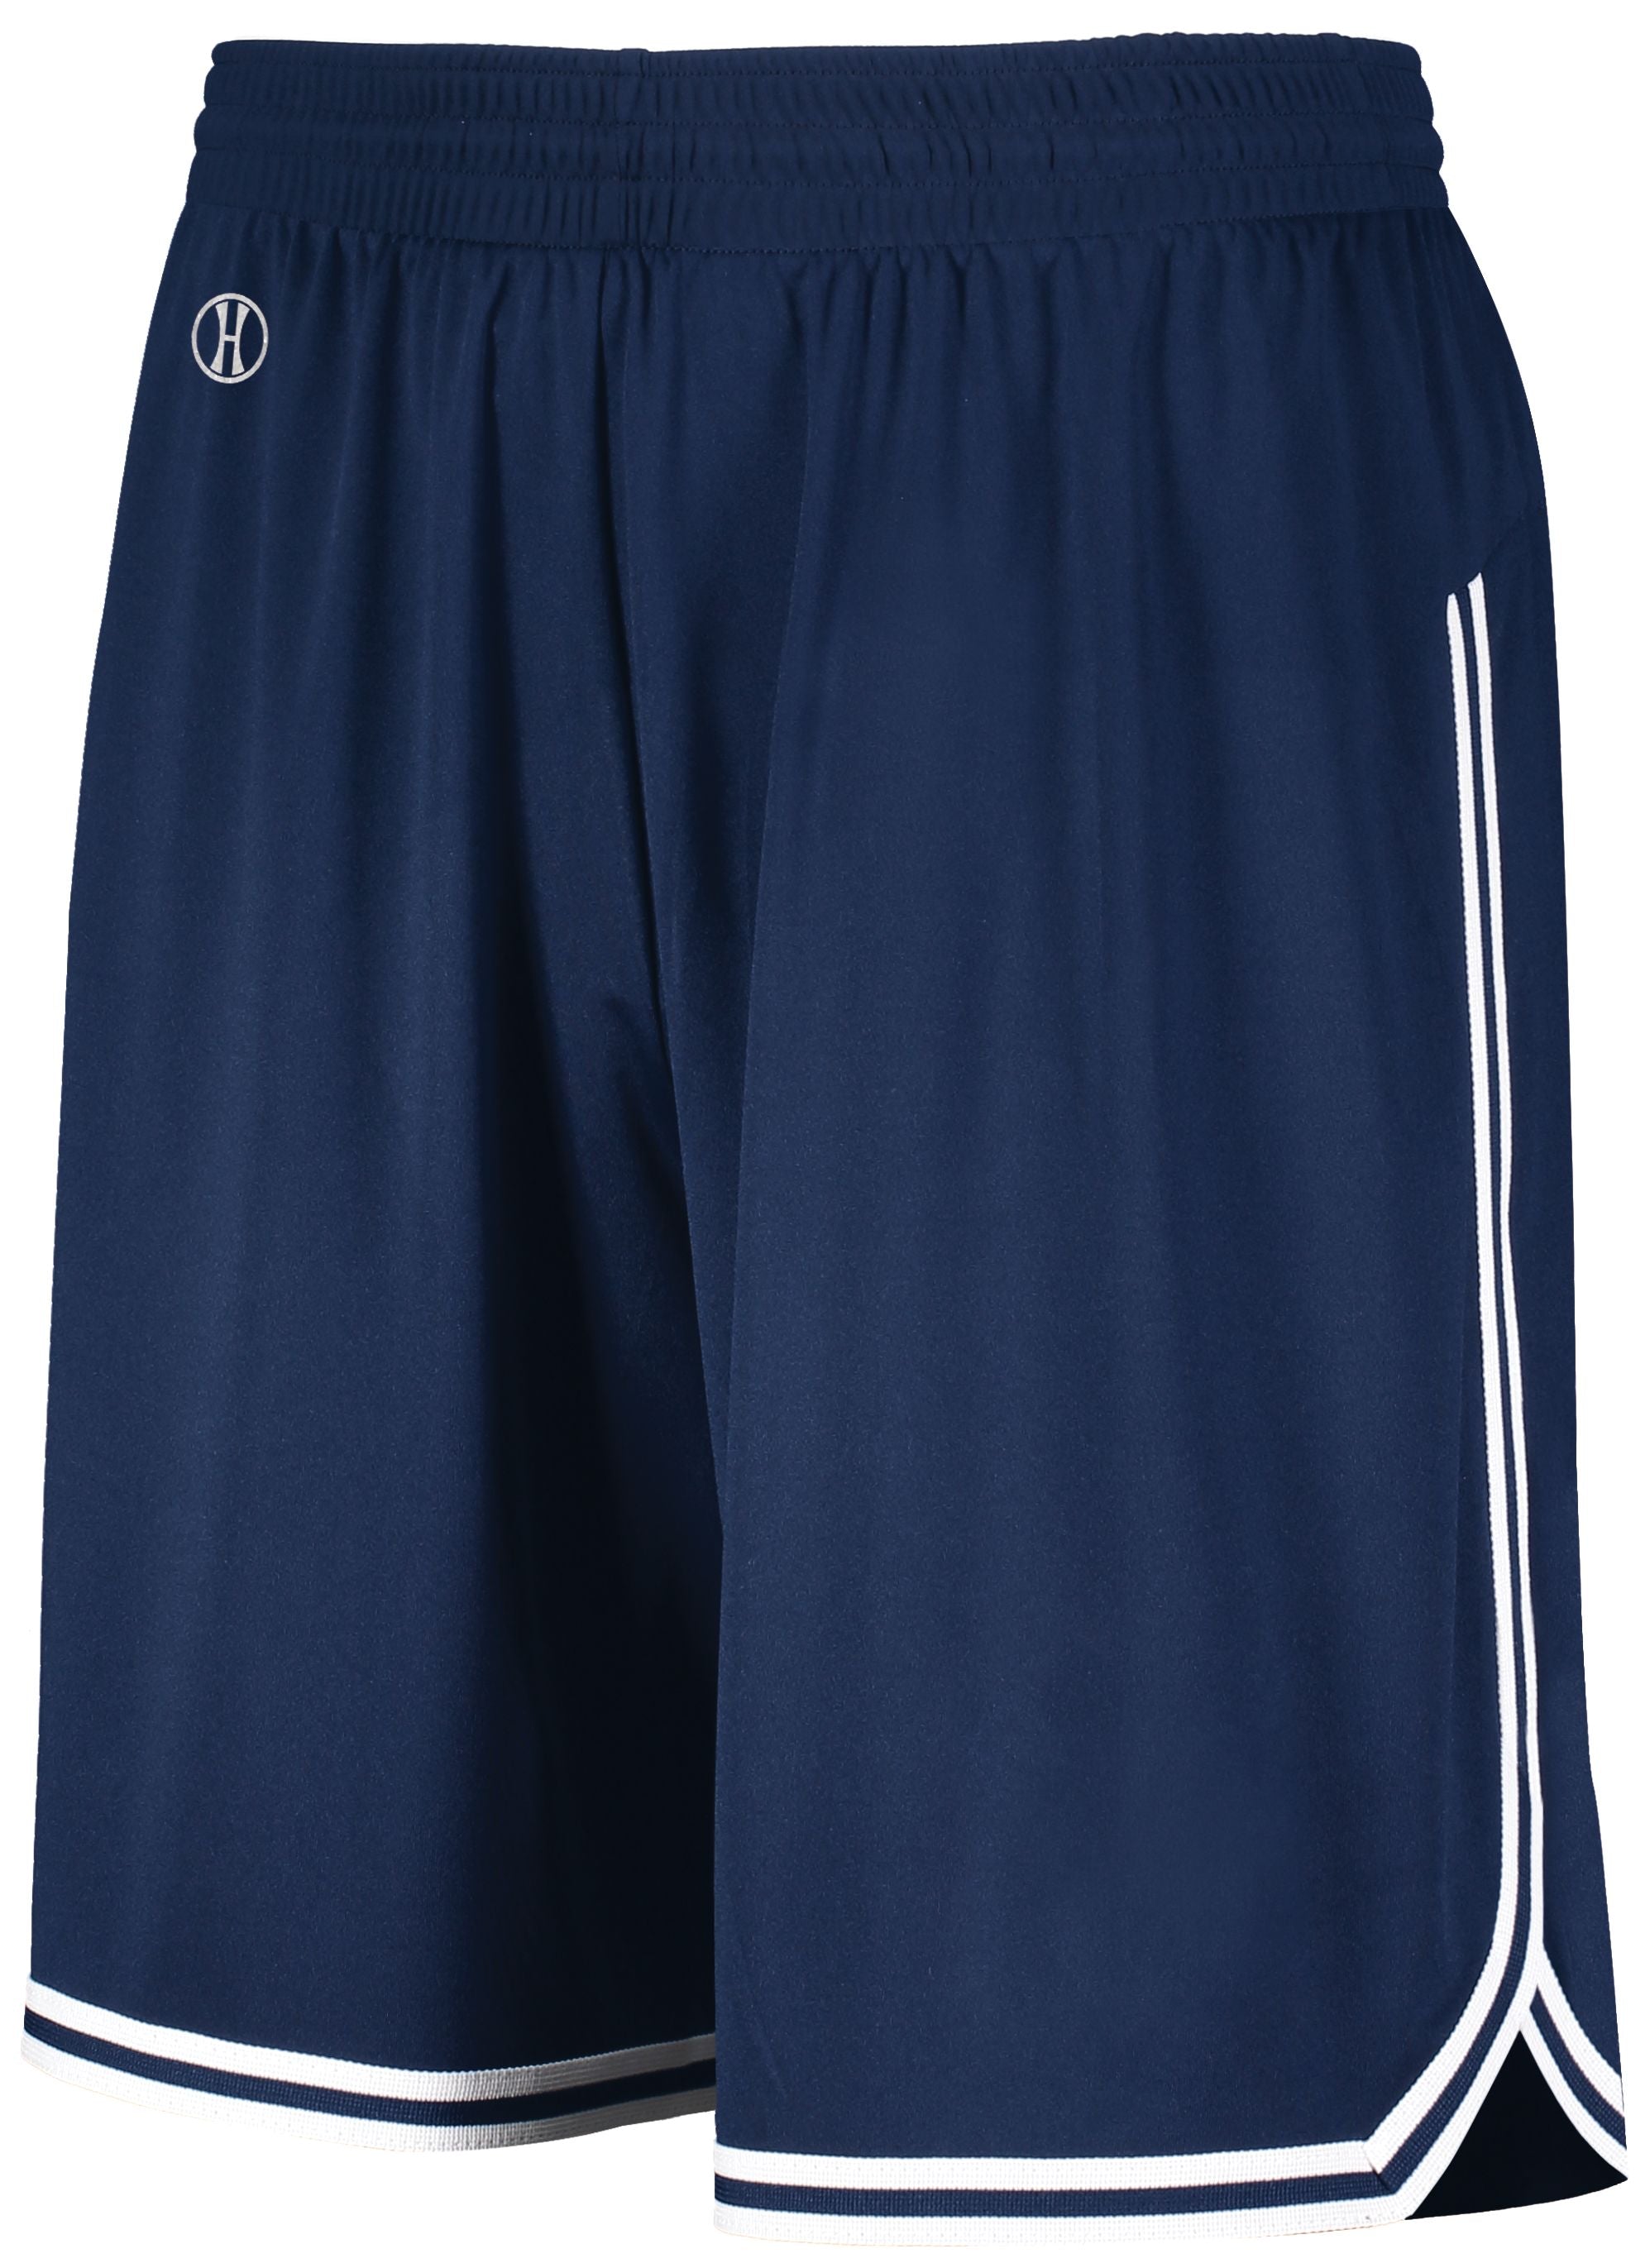 Retro Basketball Shorts 224077